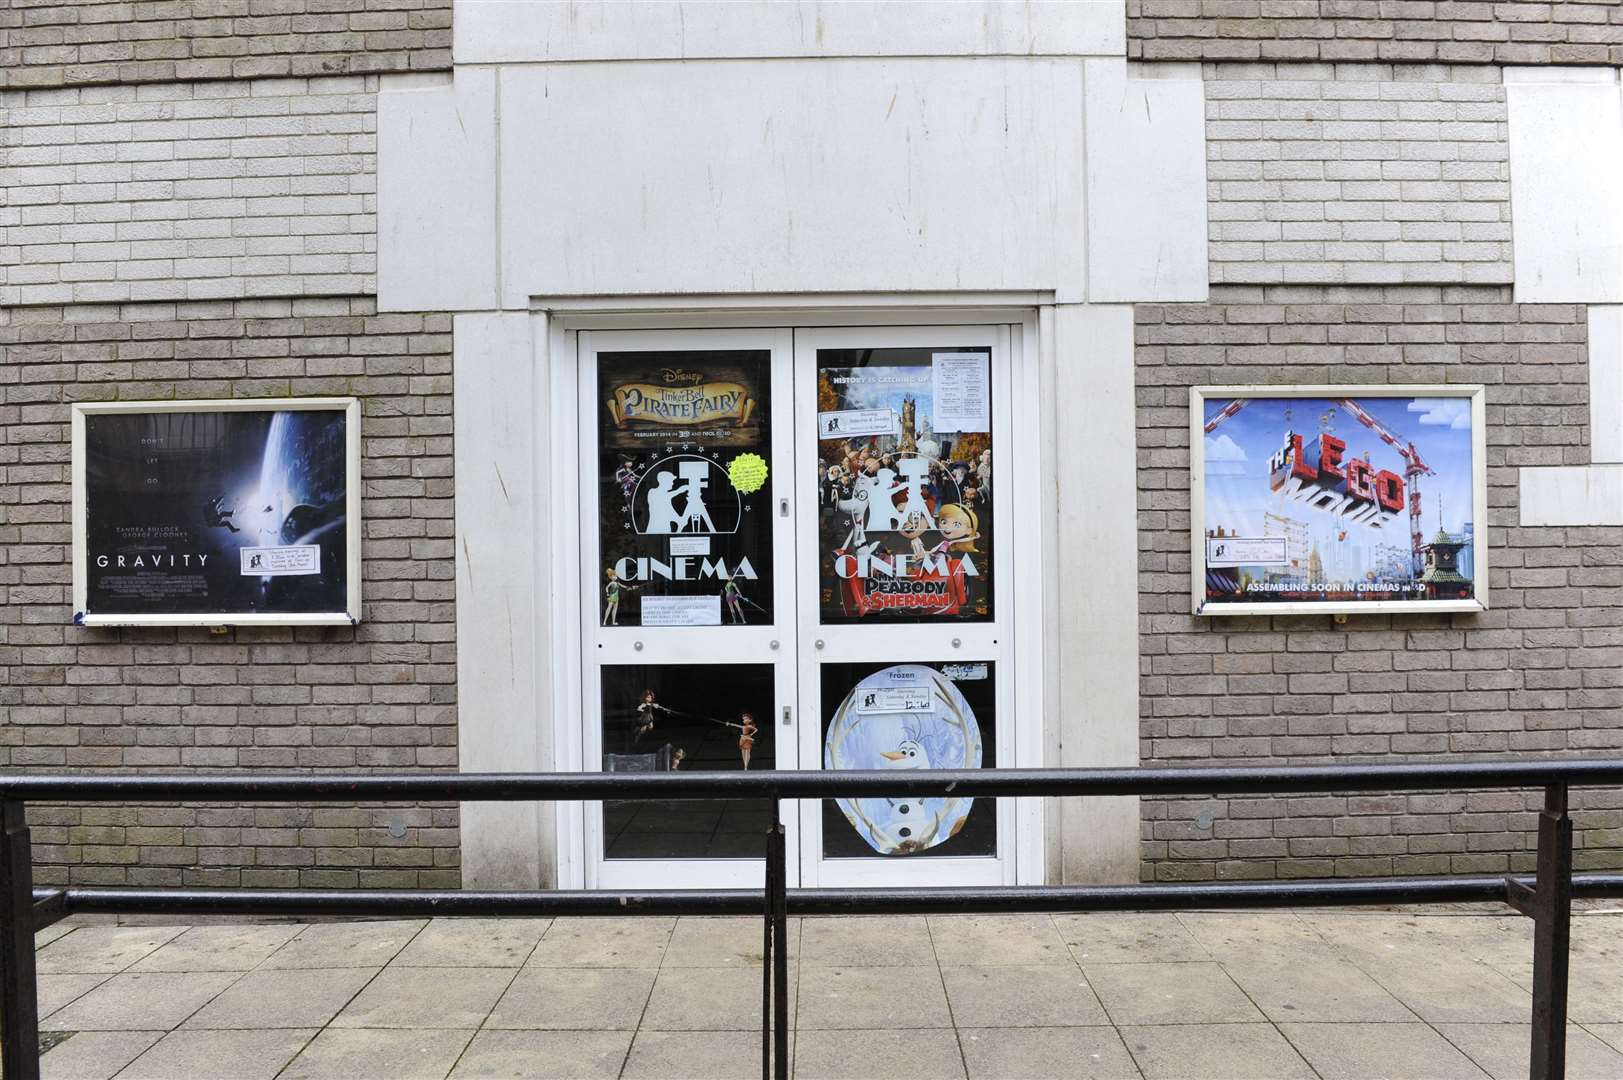 Silver Screen Cinema in Dover is temporarily closing